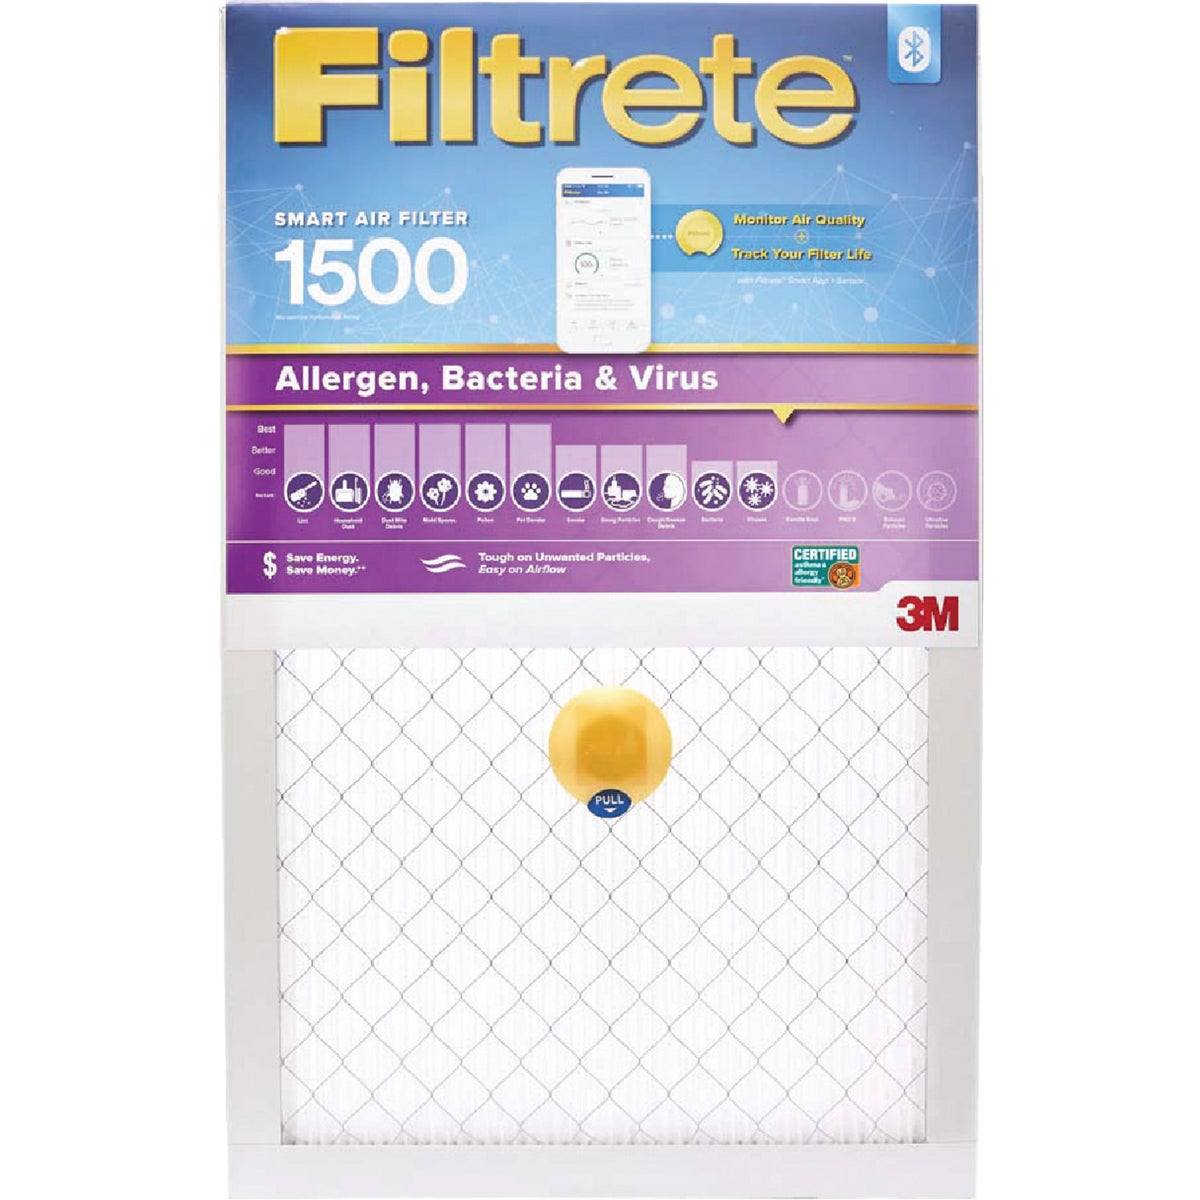 Filtrete 16 In. x 25 In. x 1 In. 1500 MPR Allergen, Bacteria & Virus Smart Furnace Filter